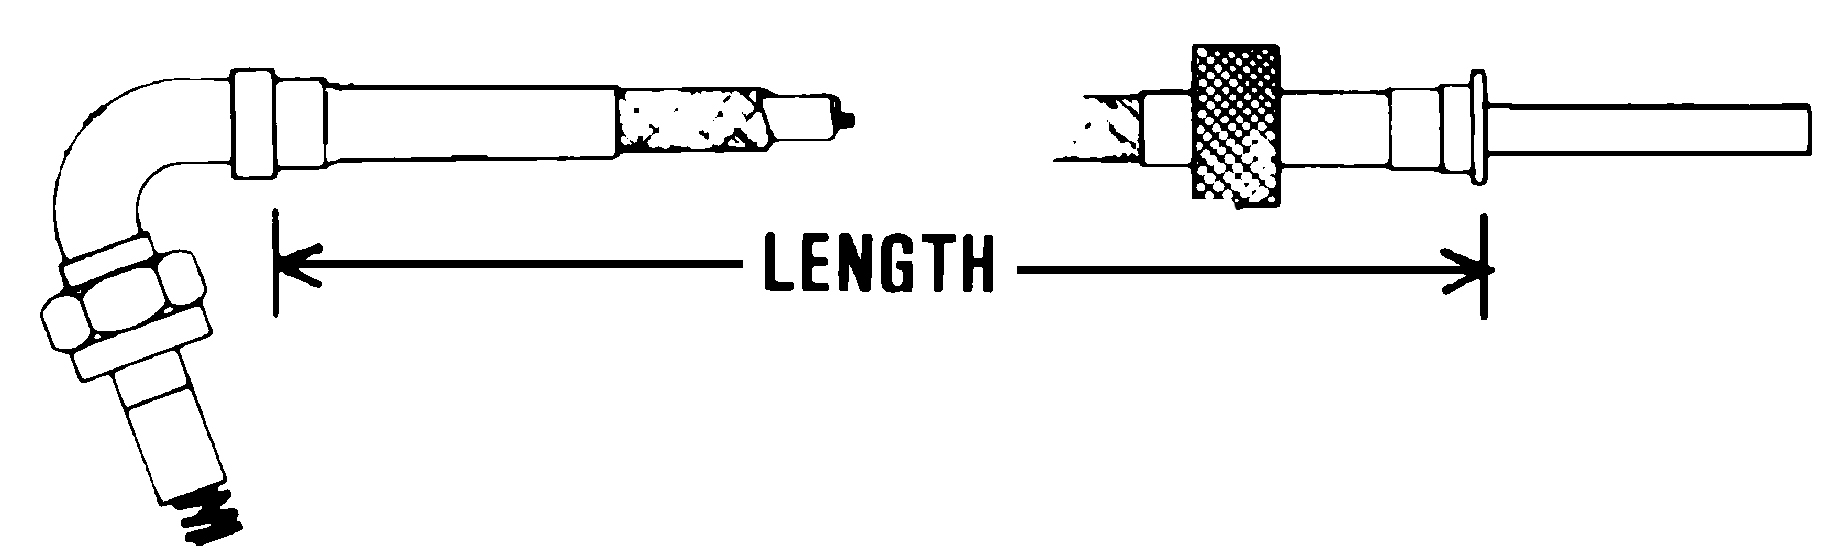 ignition-lead-model-104.jpg